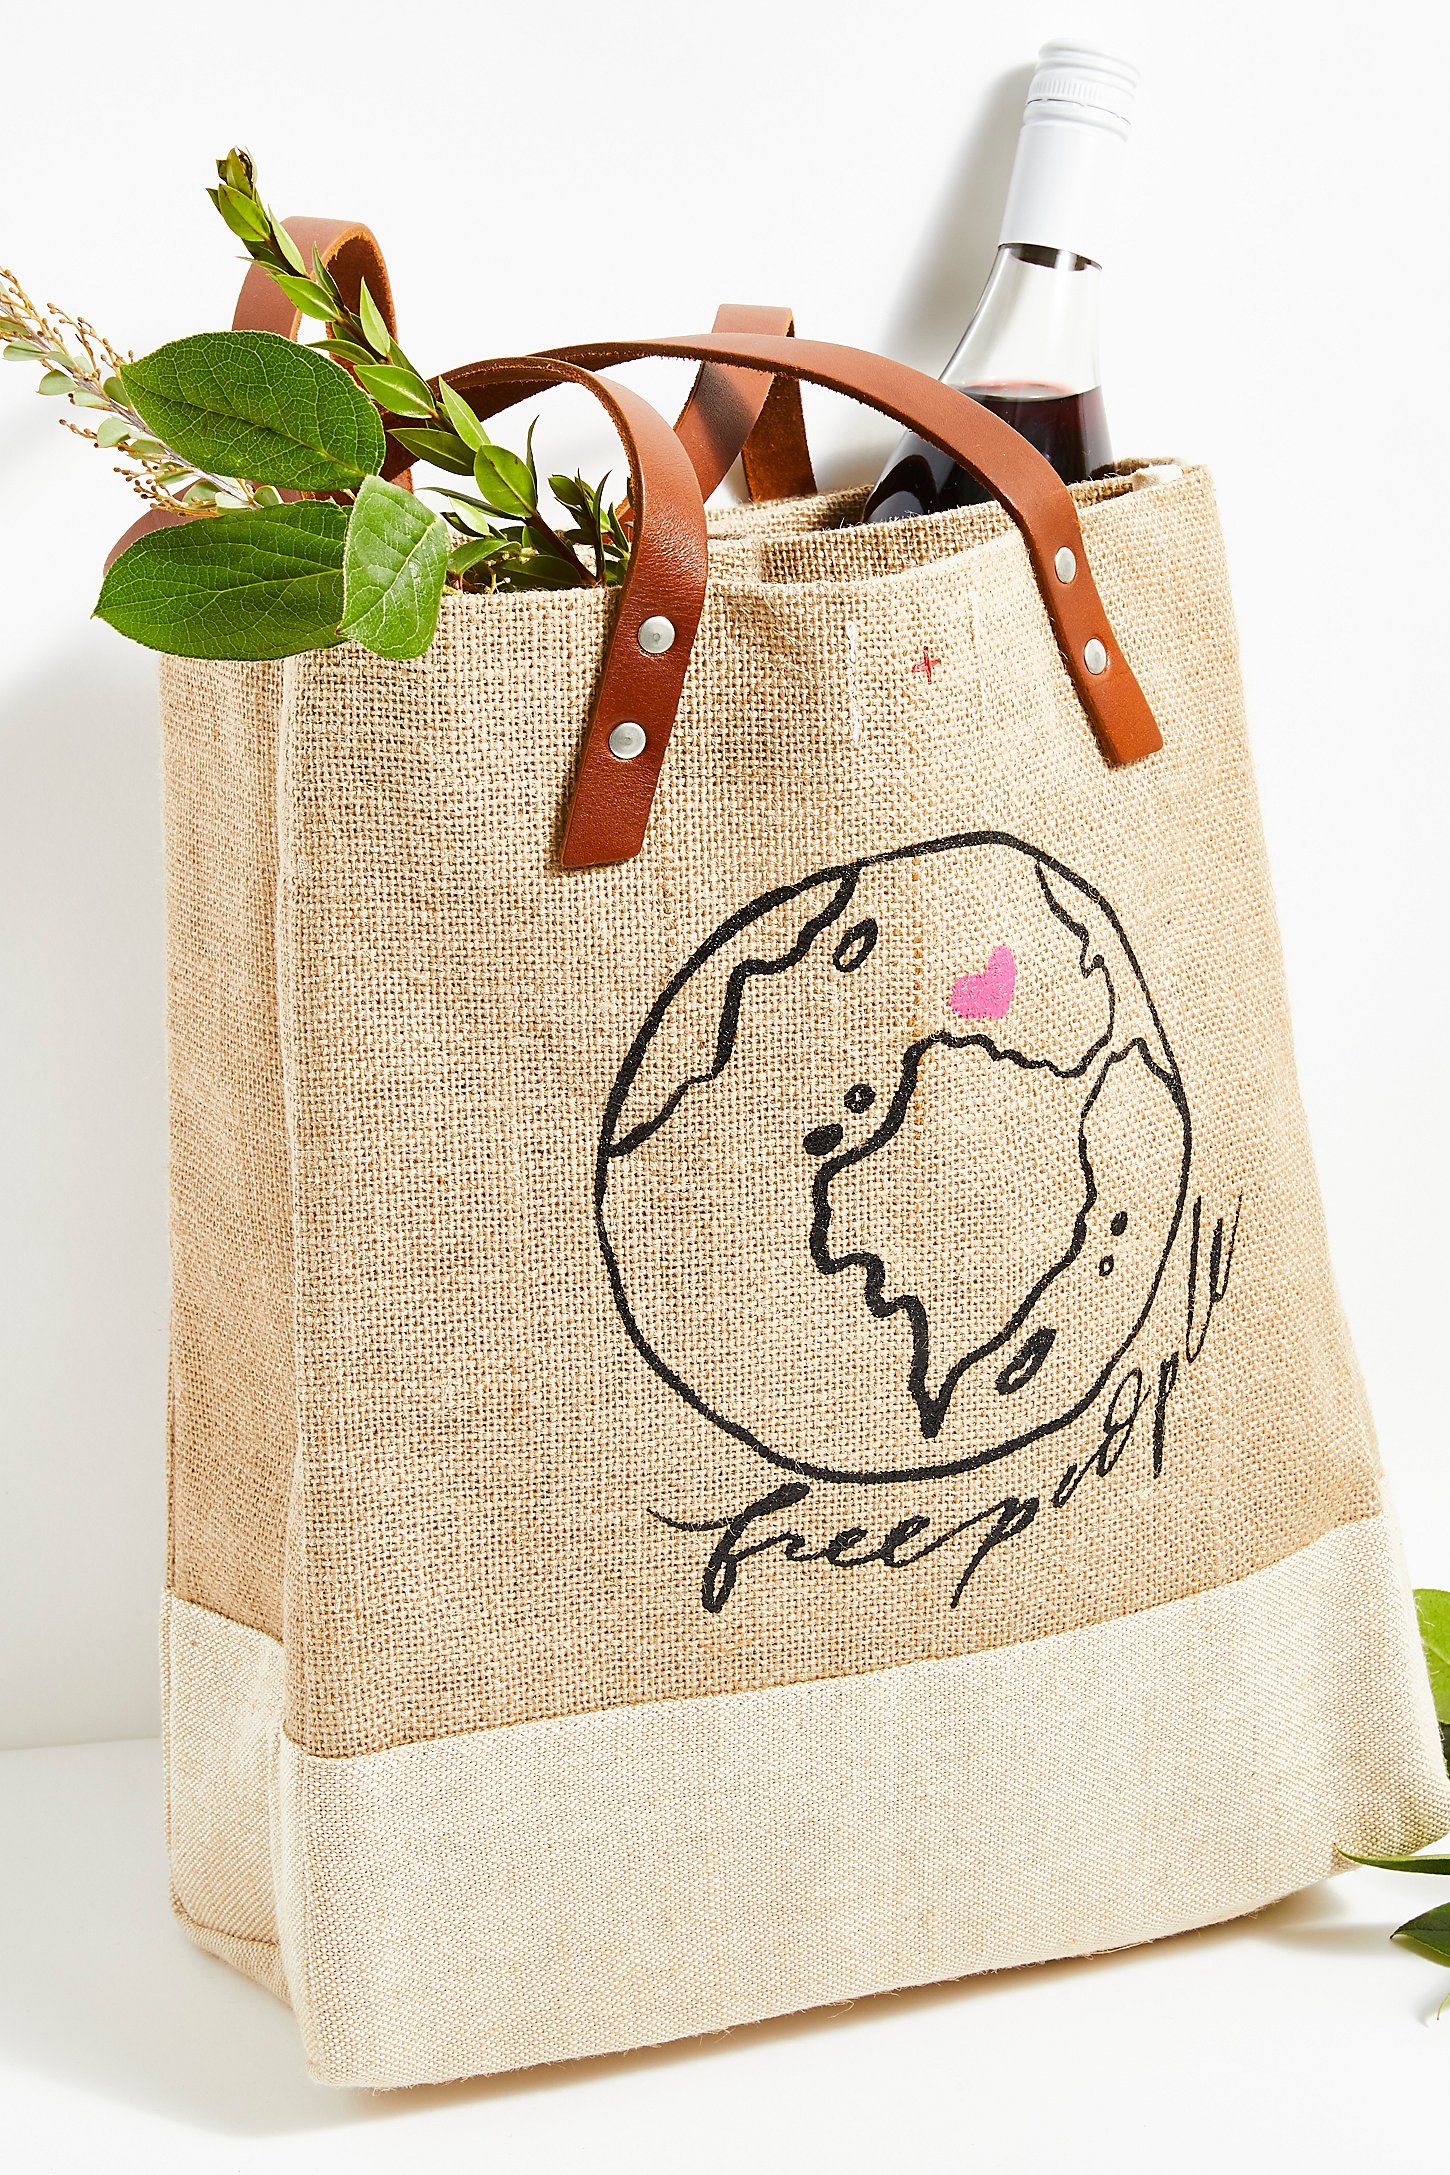 Simple tote bag farmers market bag grocery bag springtime floral